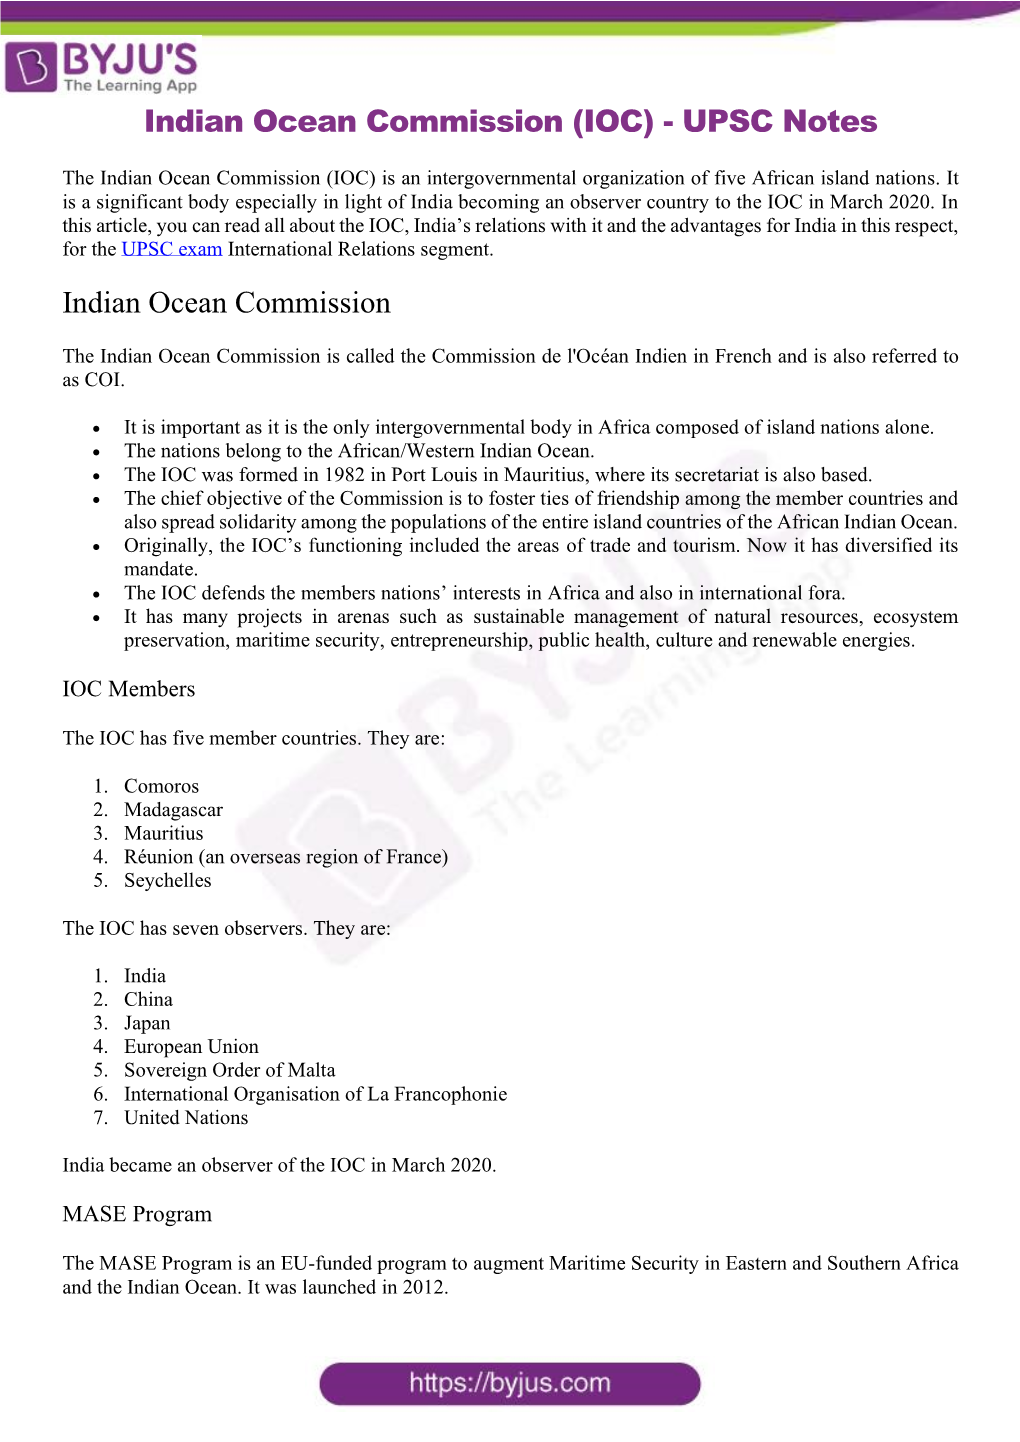 Indian Ocean Commission (IOC) - UPSC Notes